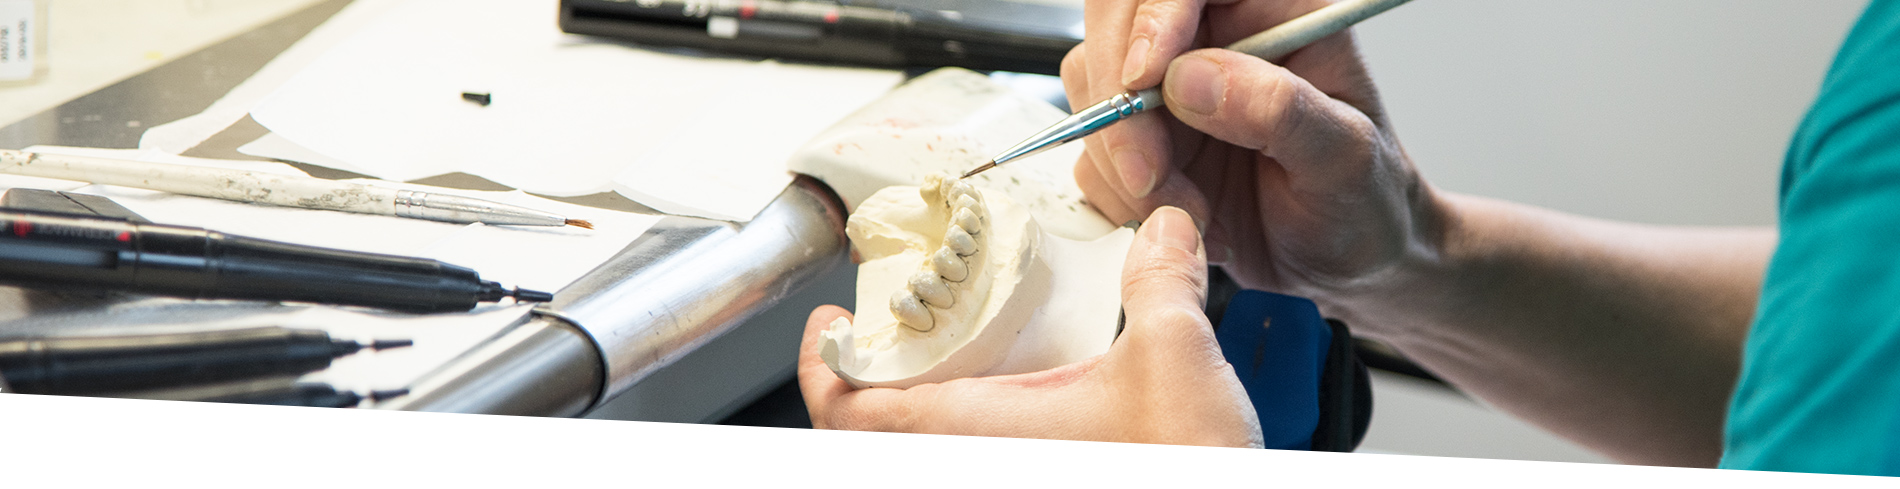 Odontoiatria Metal Free - Materiali per Odontoiatria senza Metallo